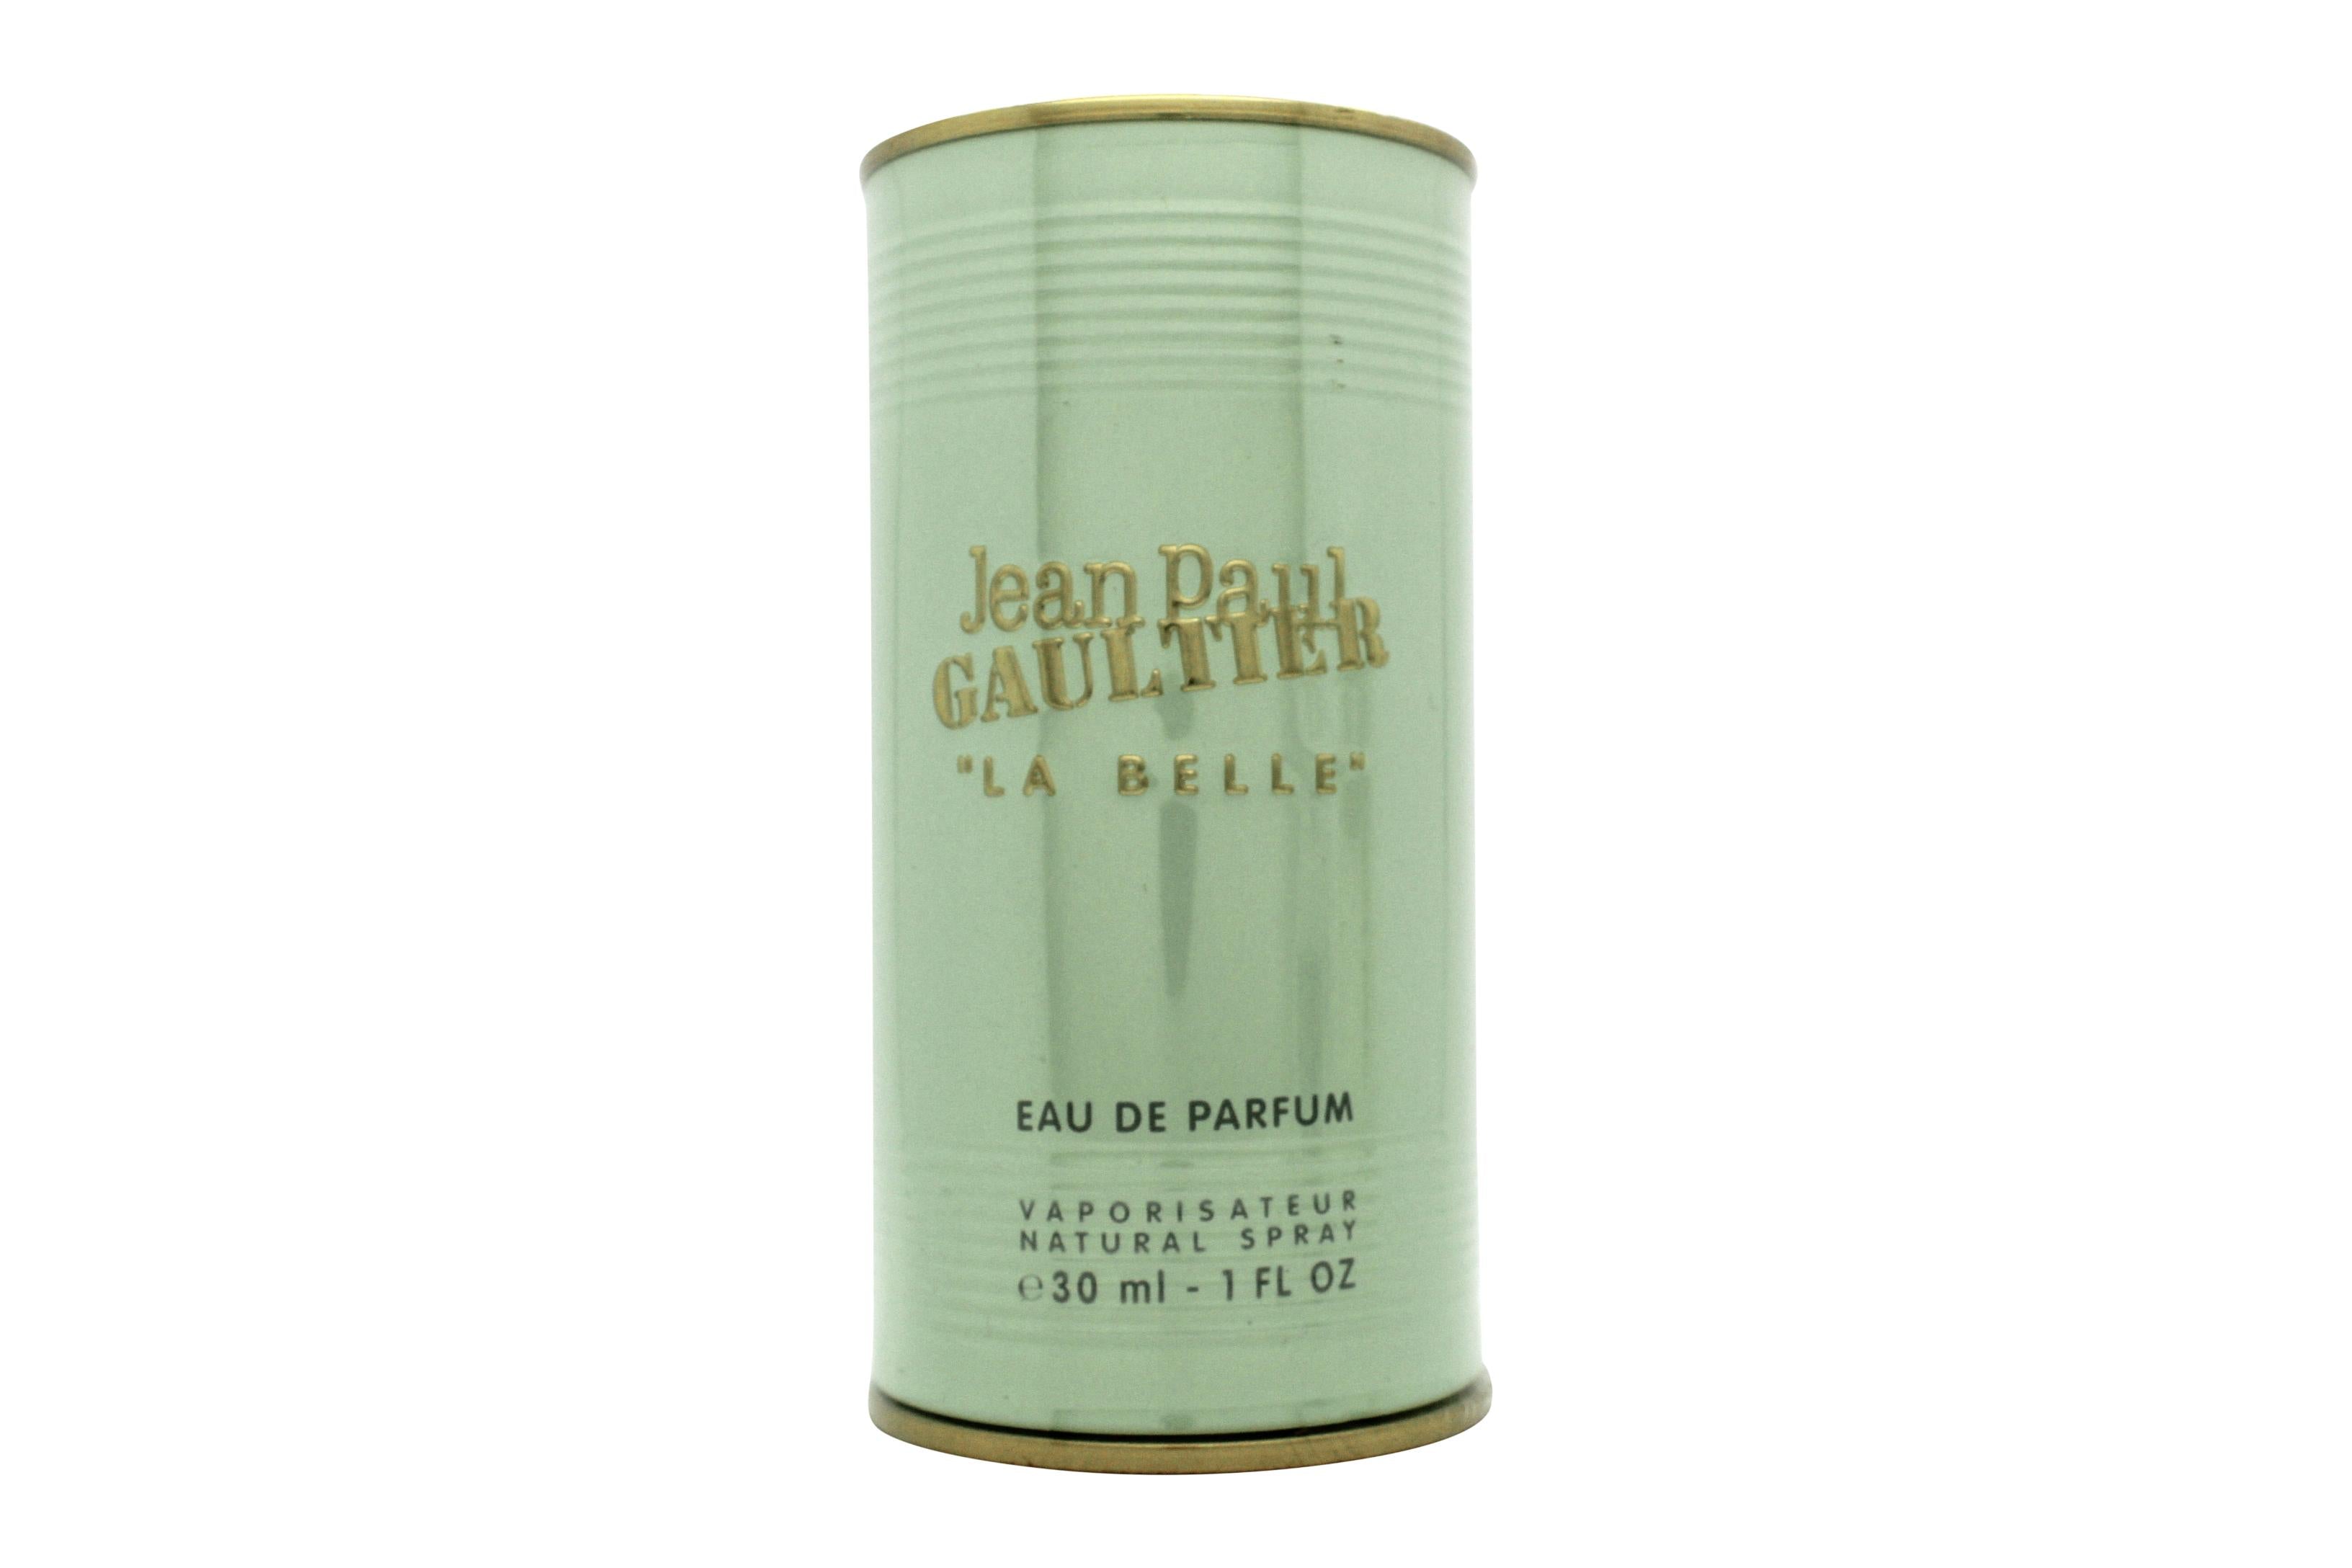 View Jean Paul Gaultier La Belle Eau de Parfum 30ml Spray information